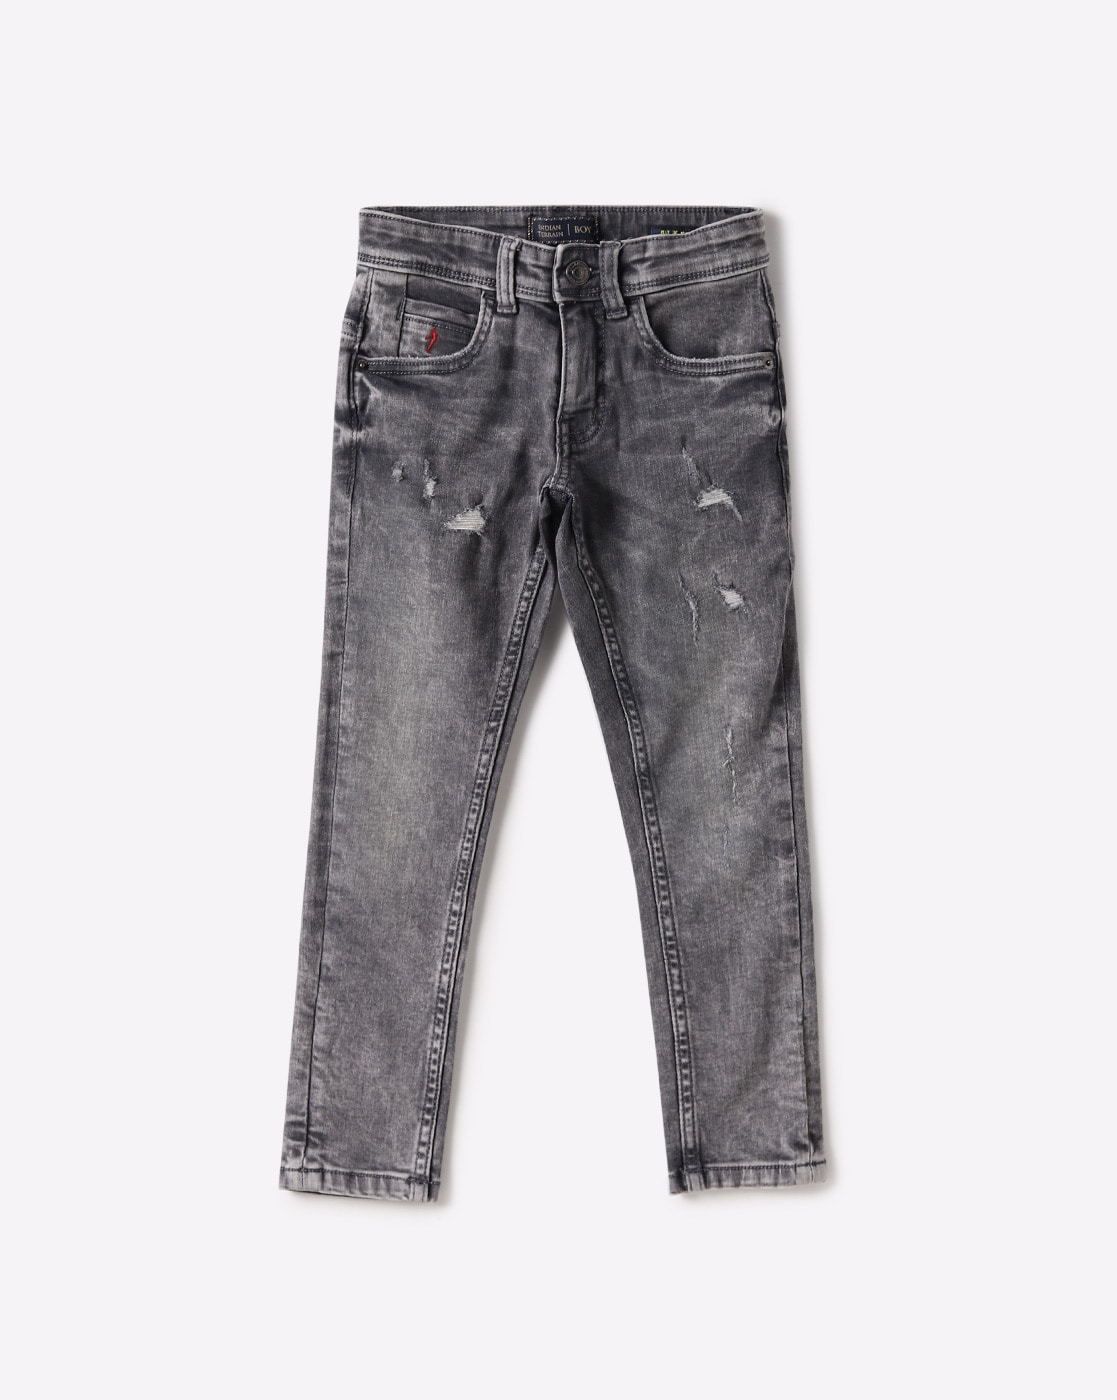 light grey distressed jeans